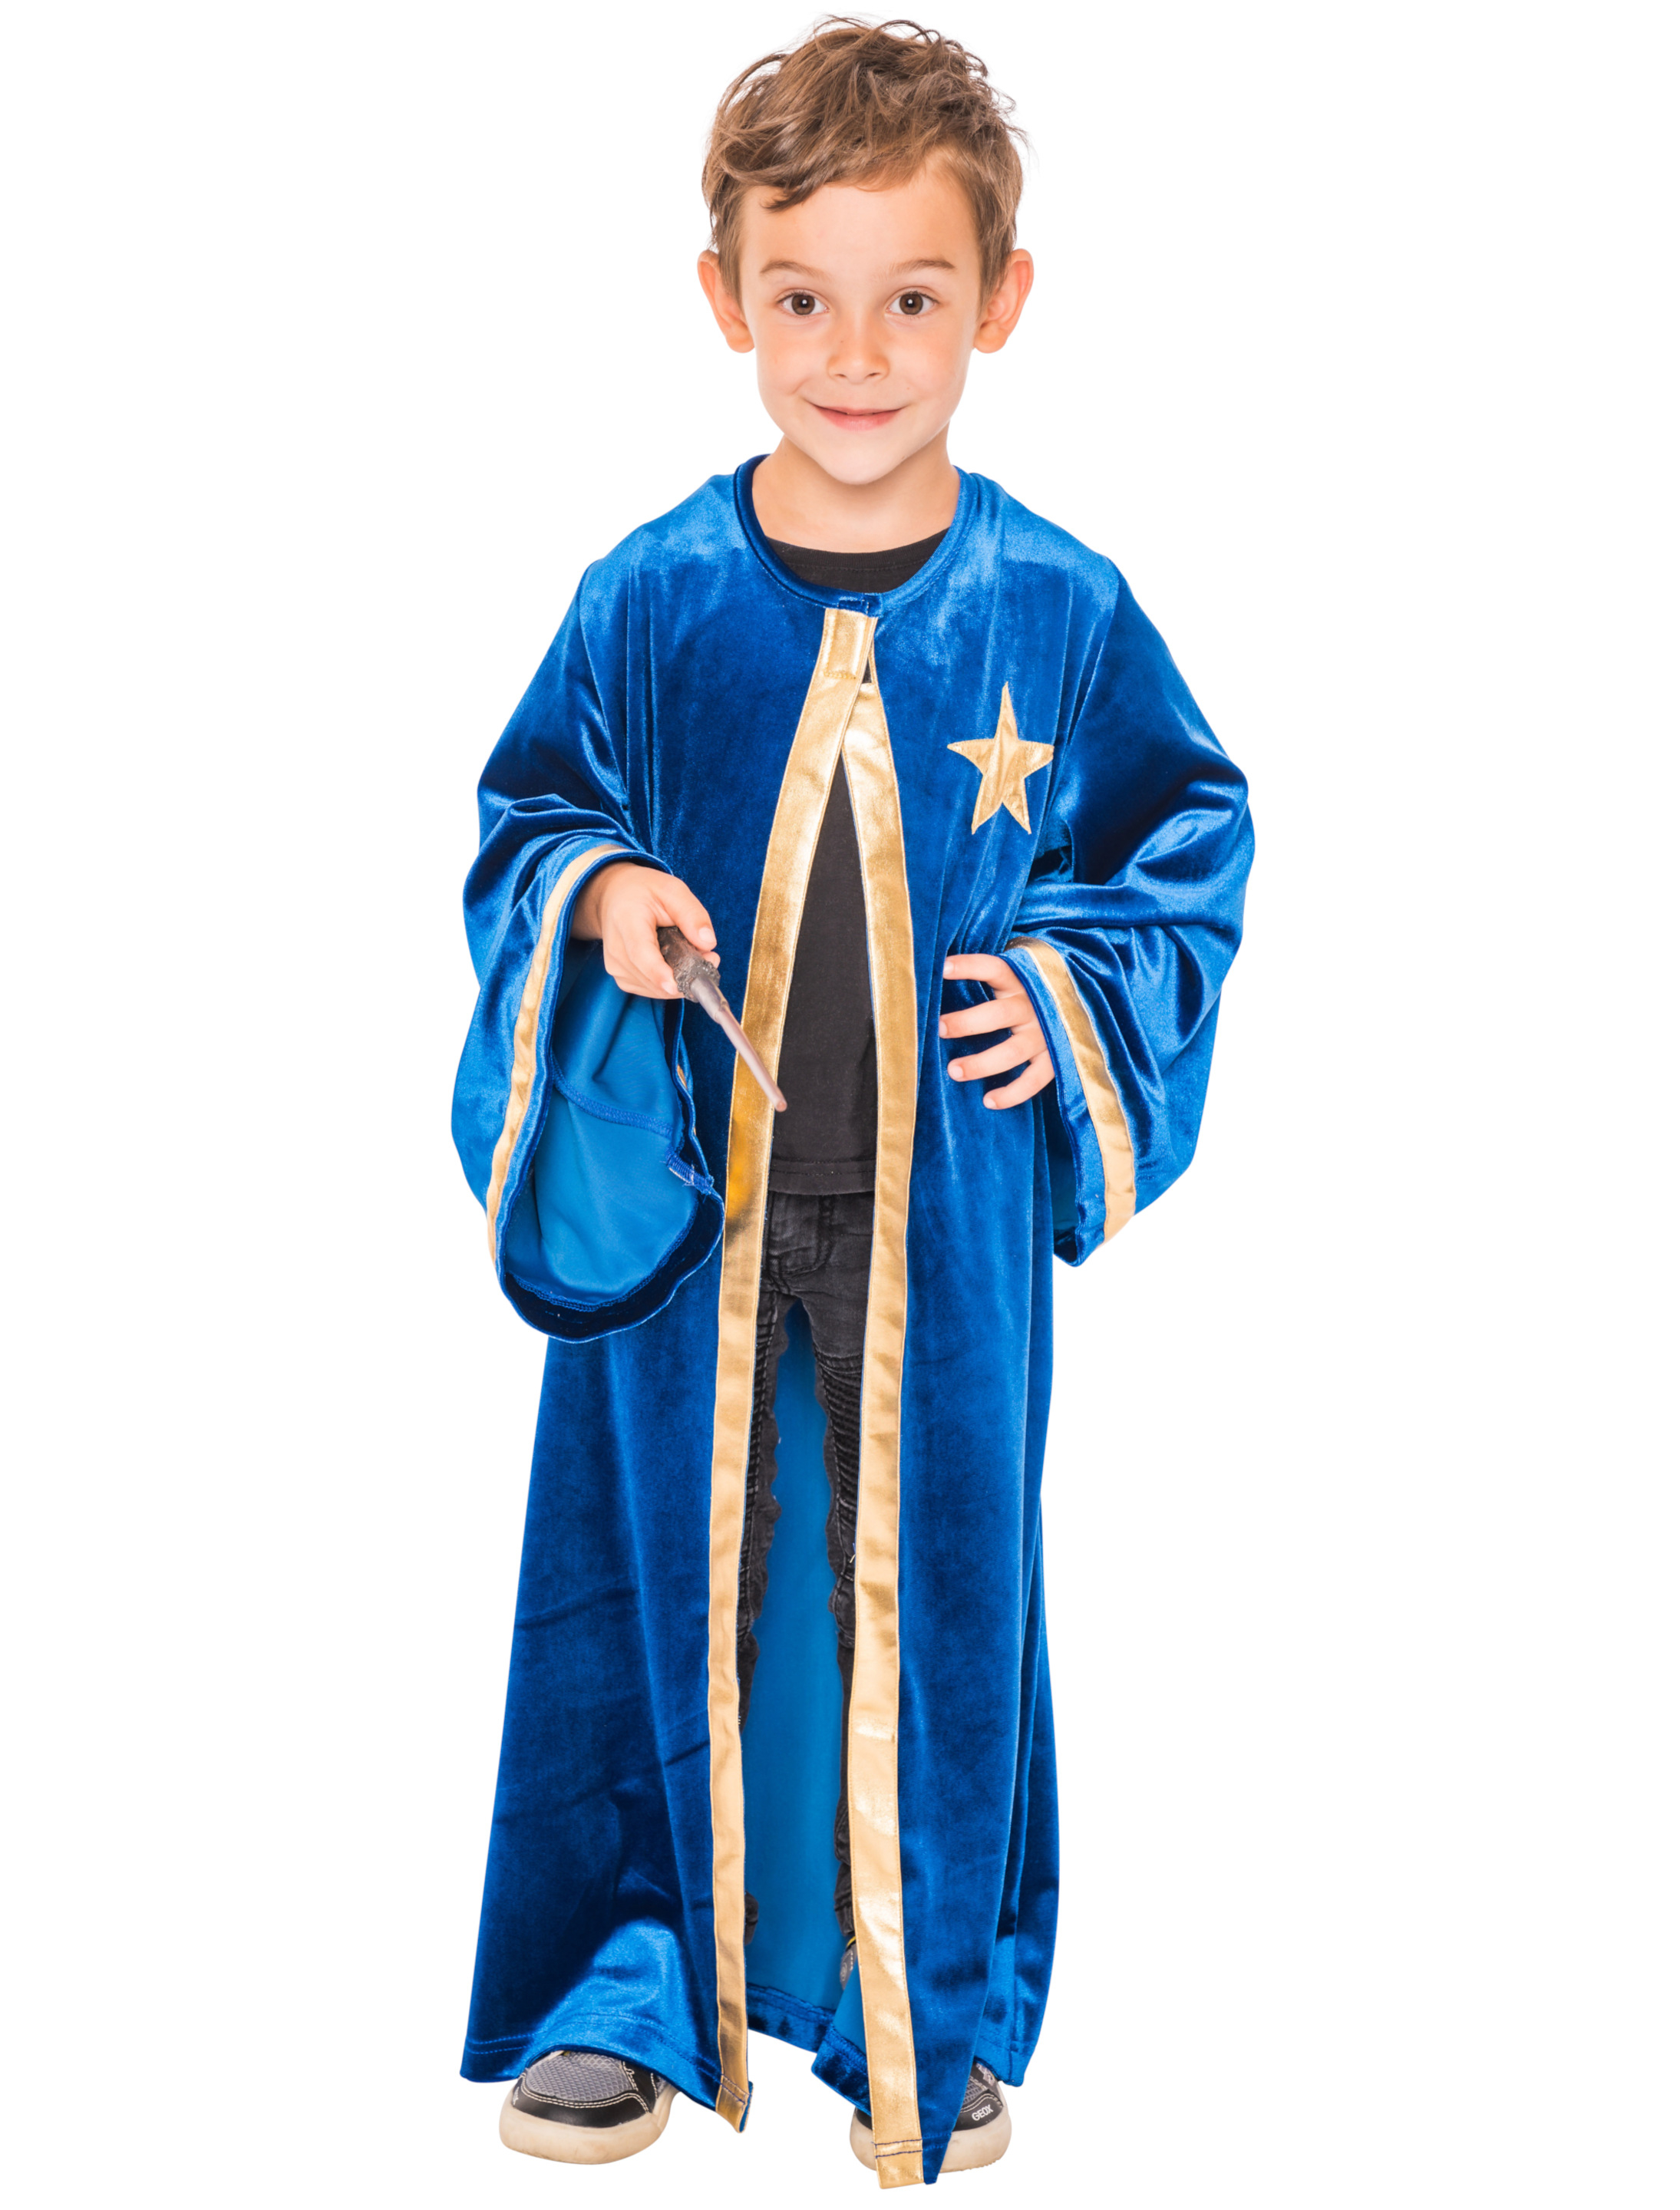 Mantel Zauberer Kinder blau 128